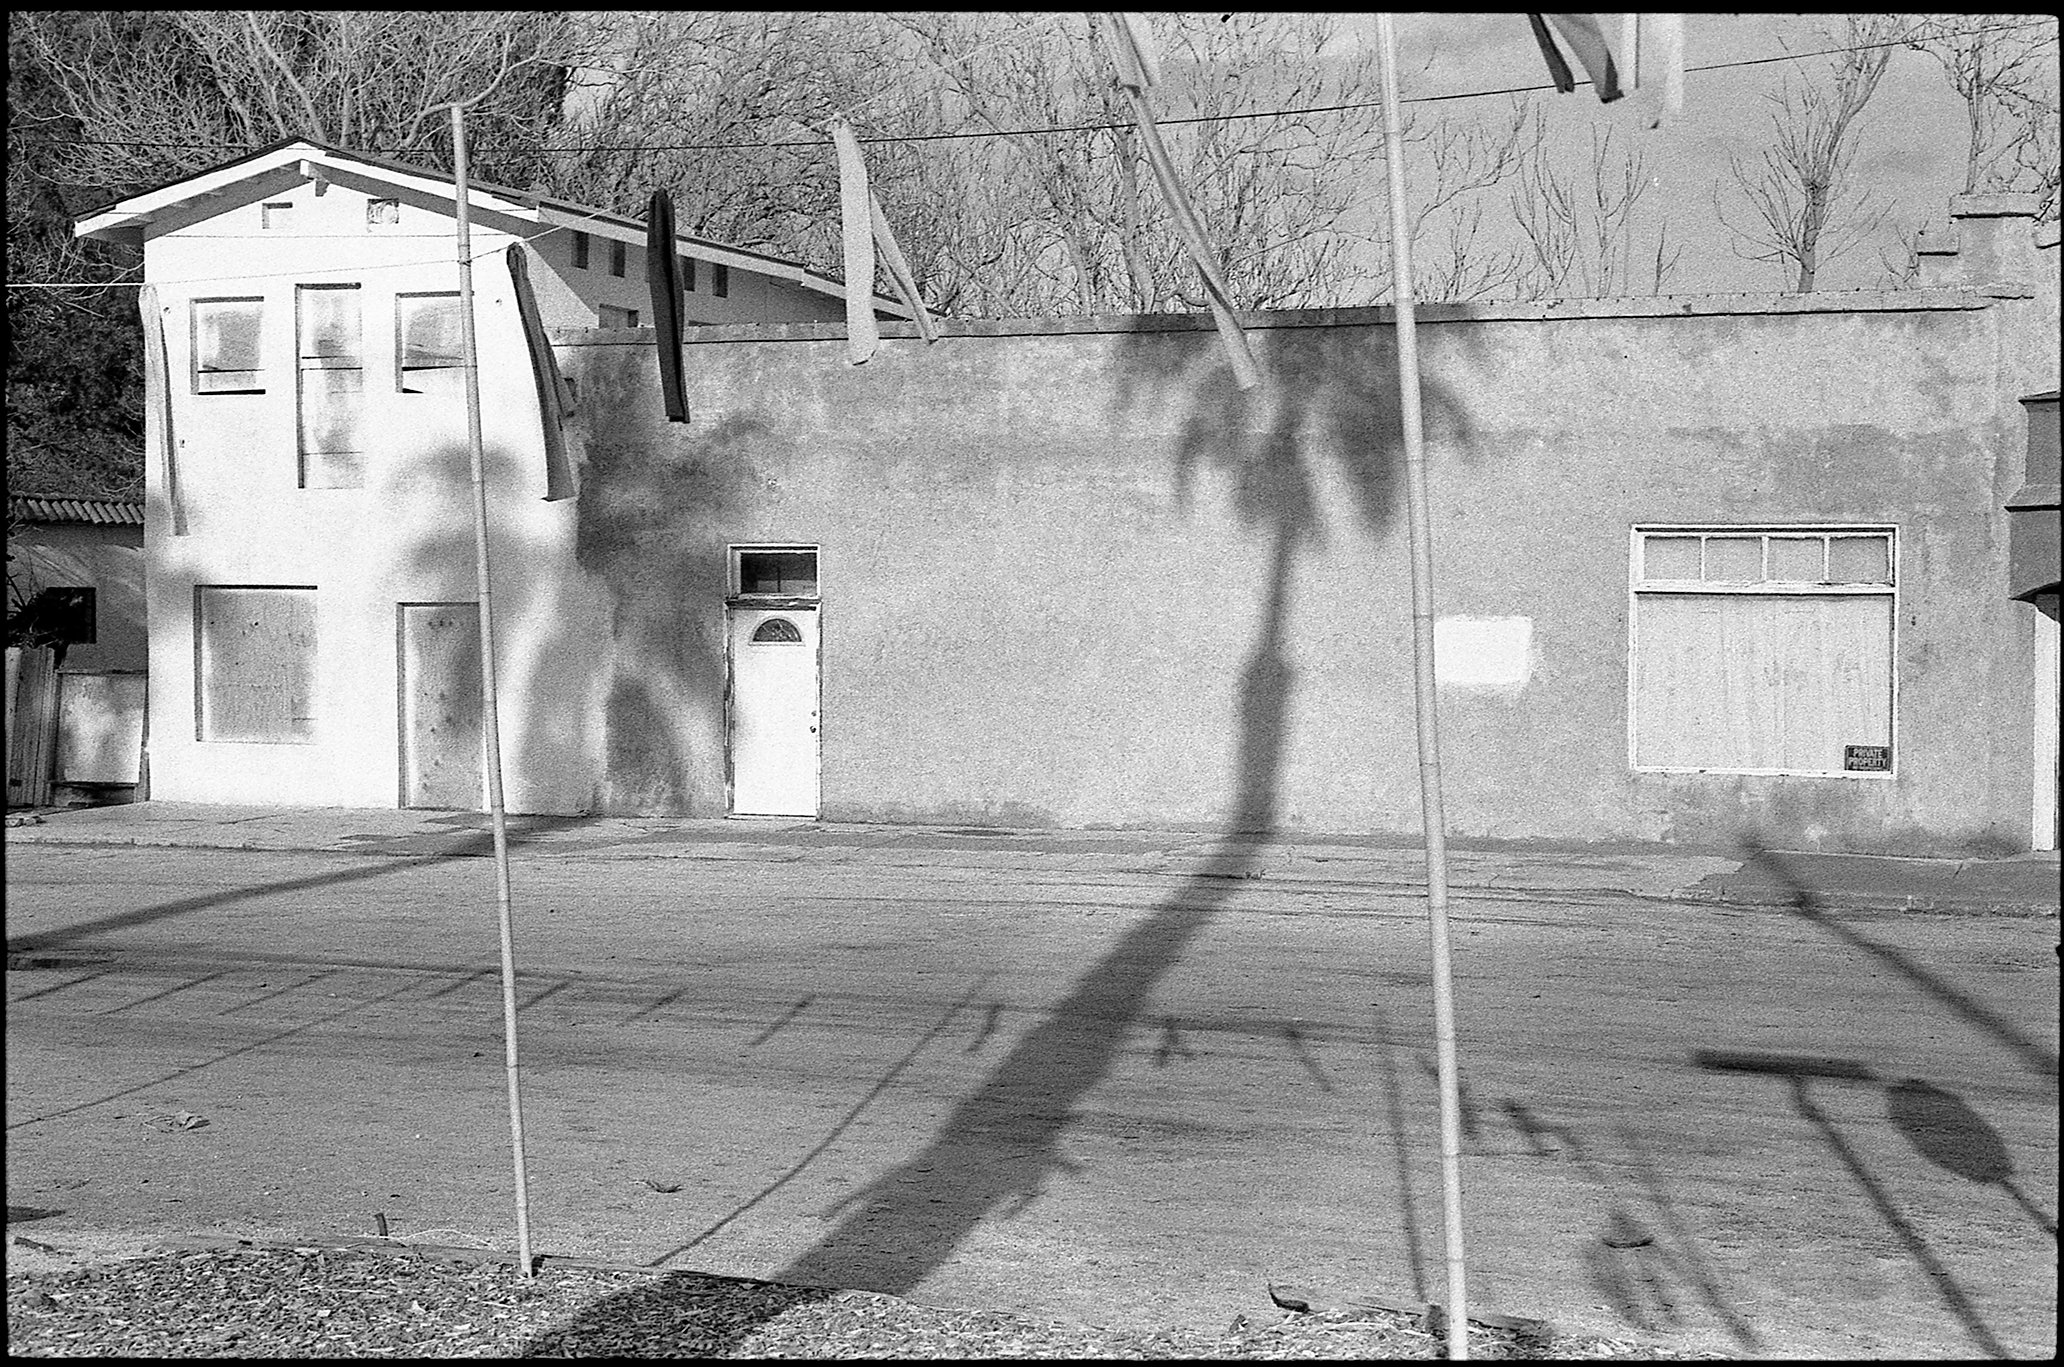 Palm Tree Shadows, Jacumba Hot Springs CA, February 2022